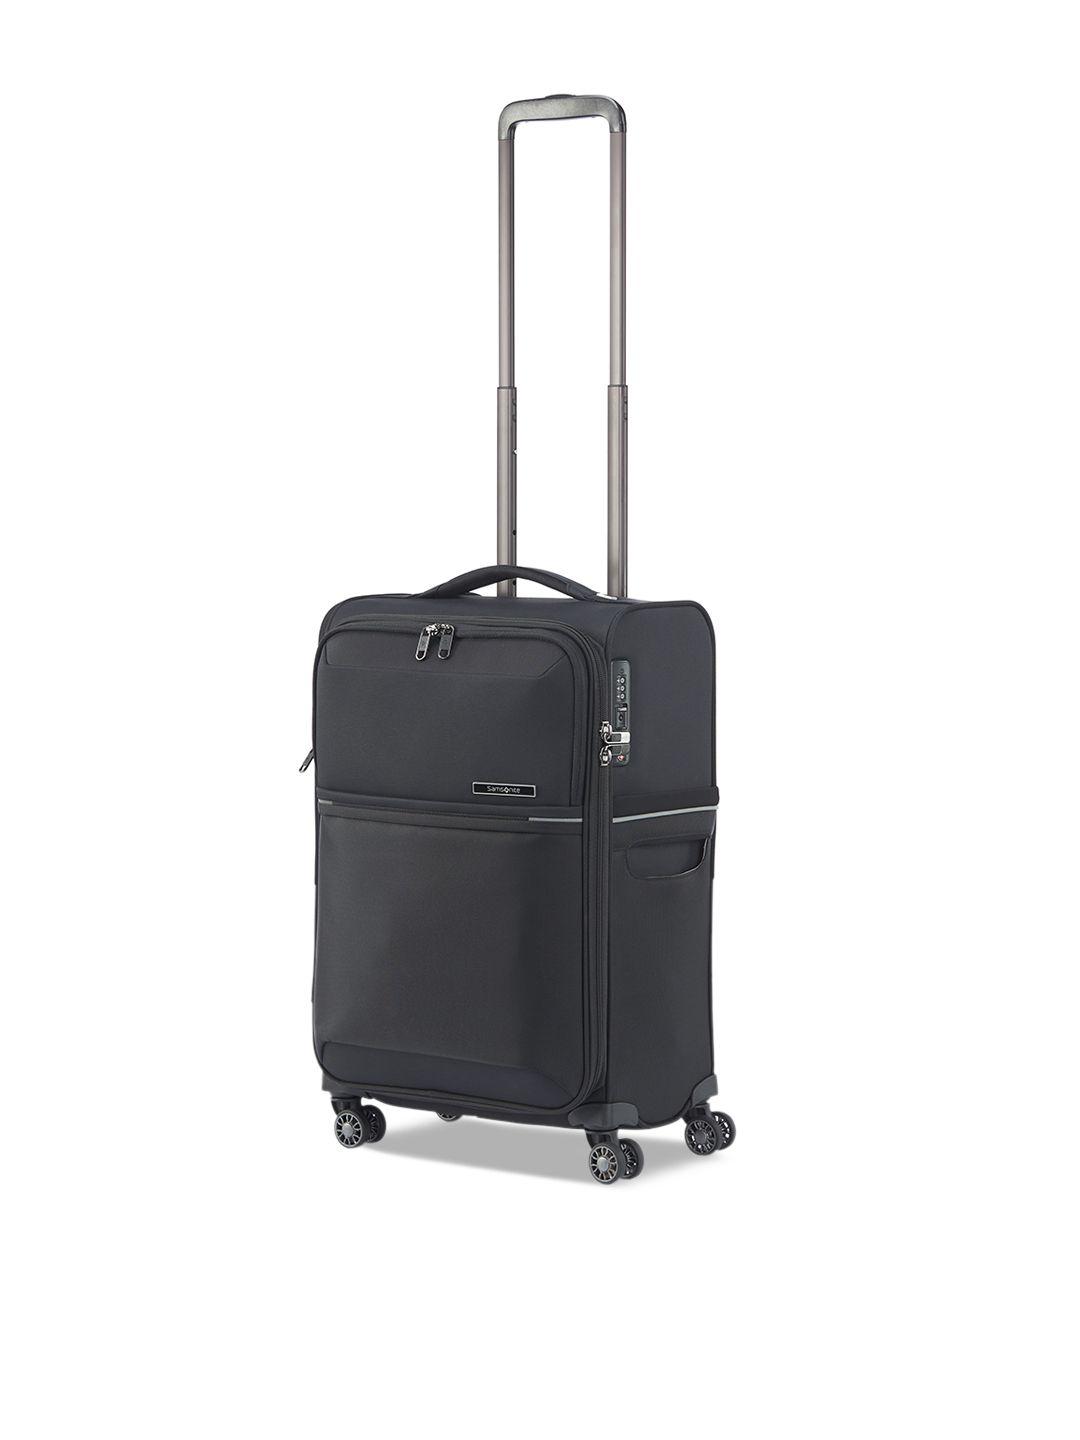 samsonite cabin trolley suitcase bag